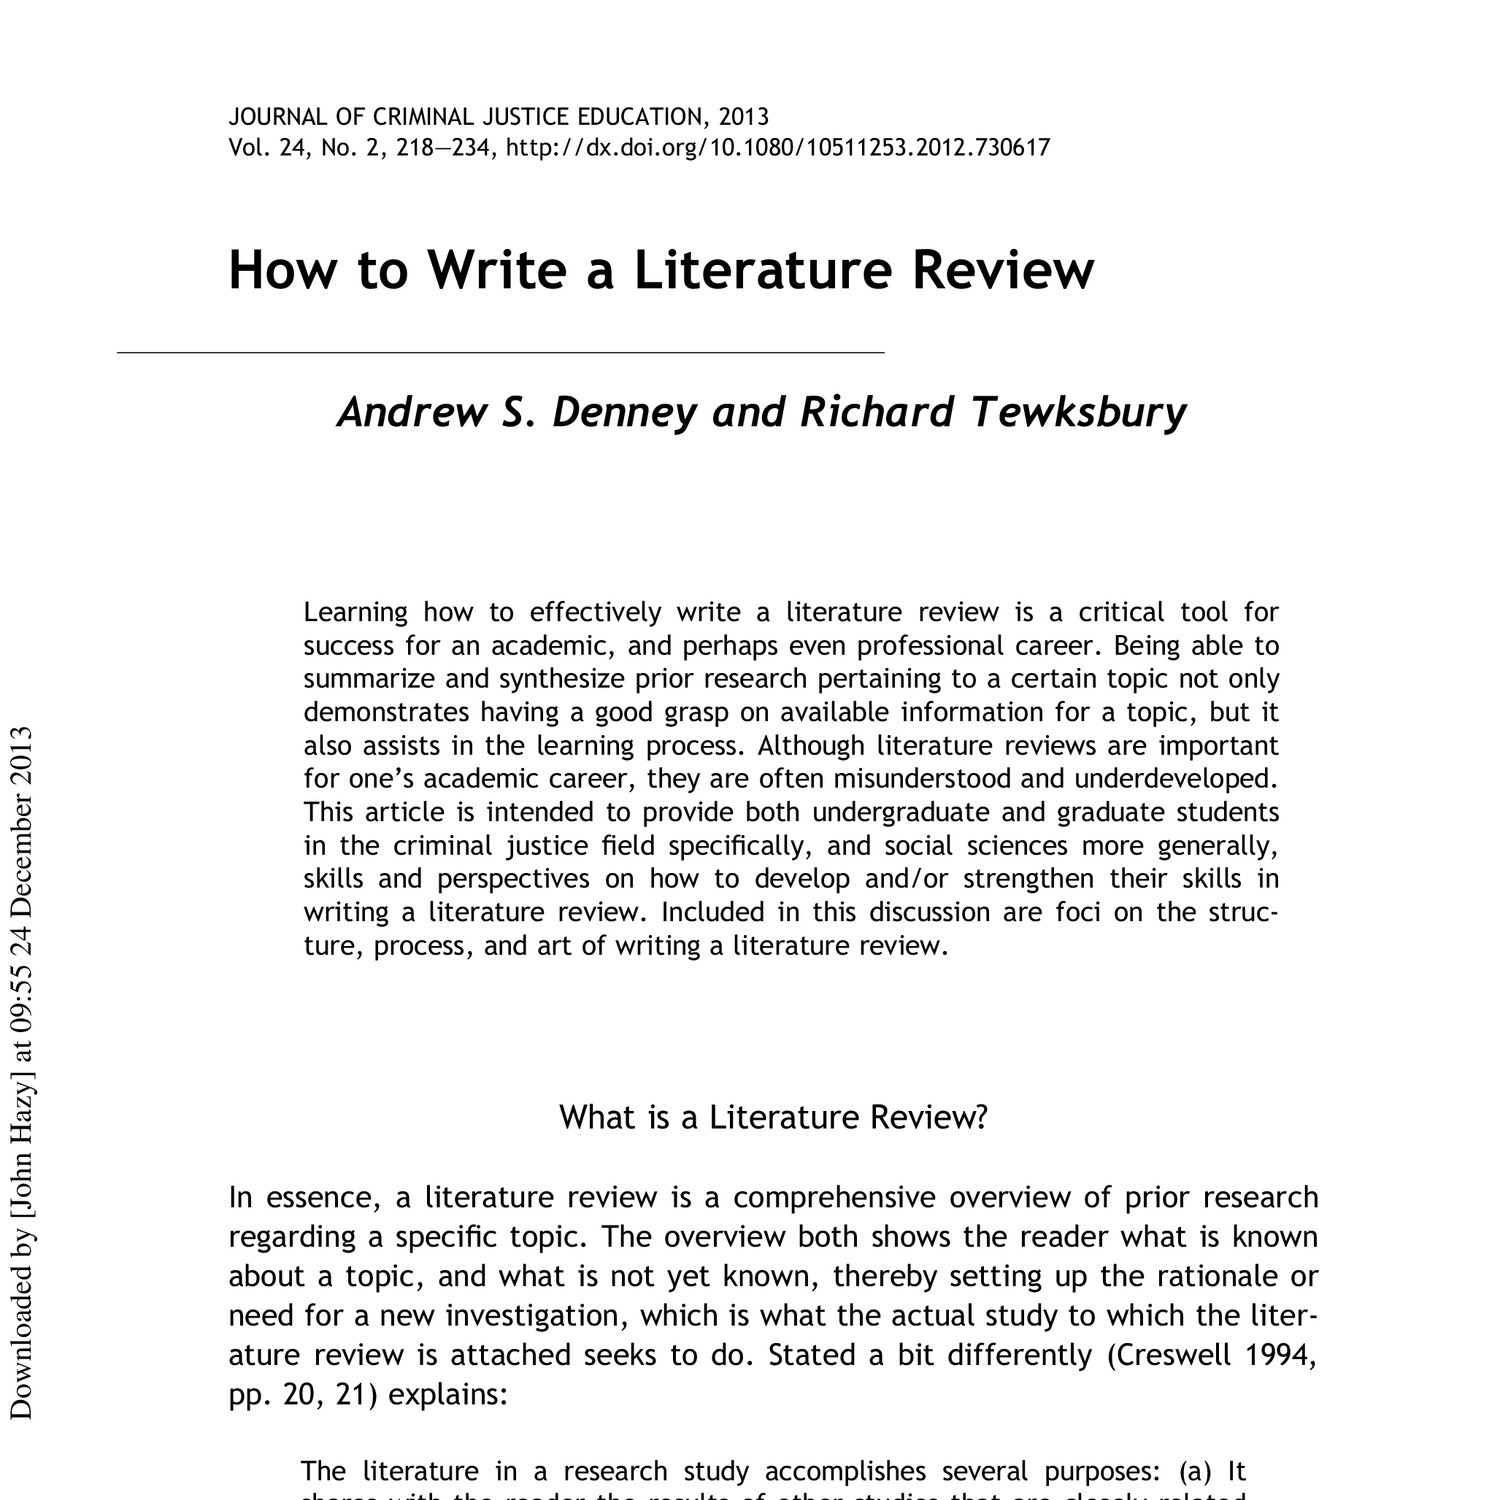 galvan writing literature reviews pdf